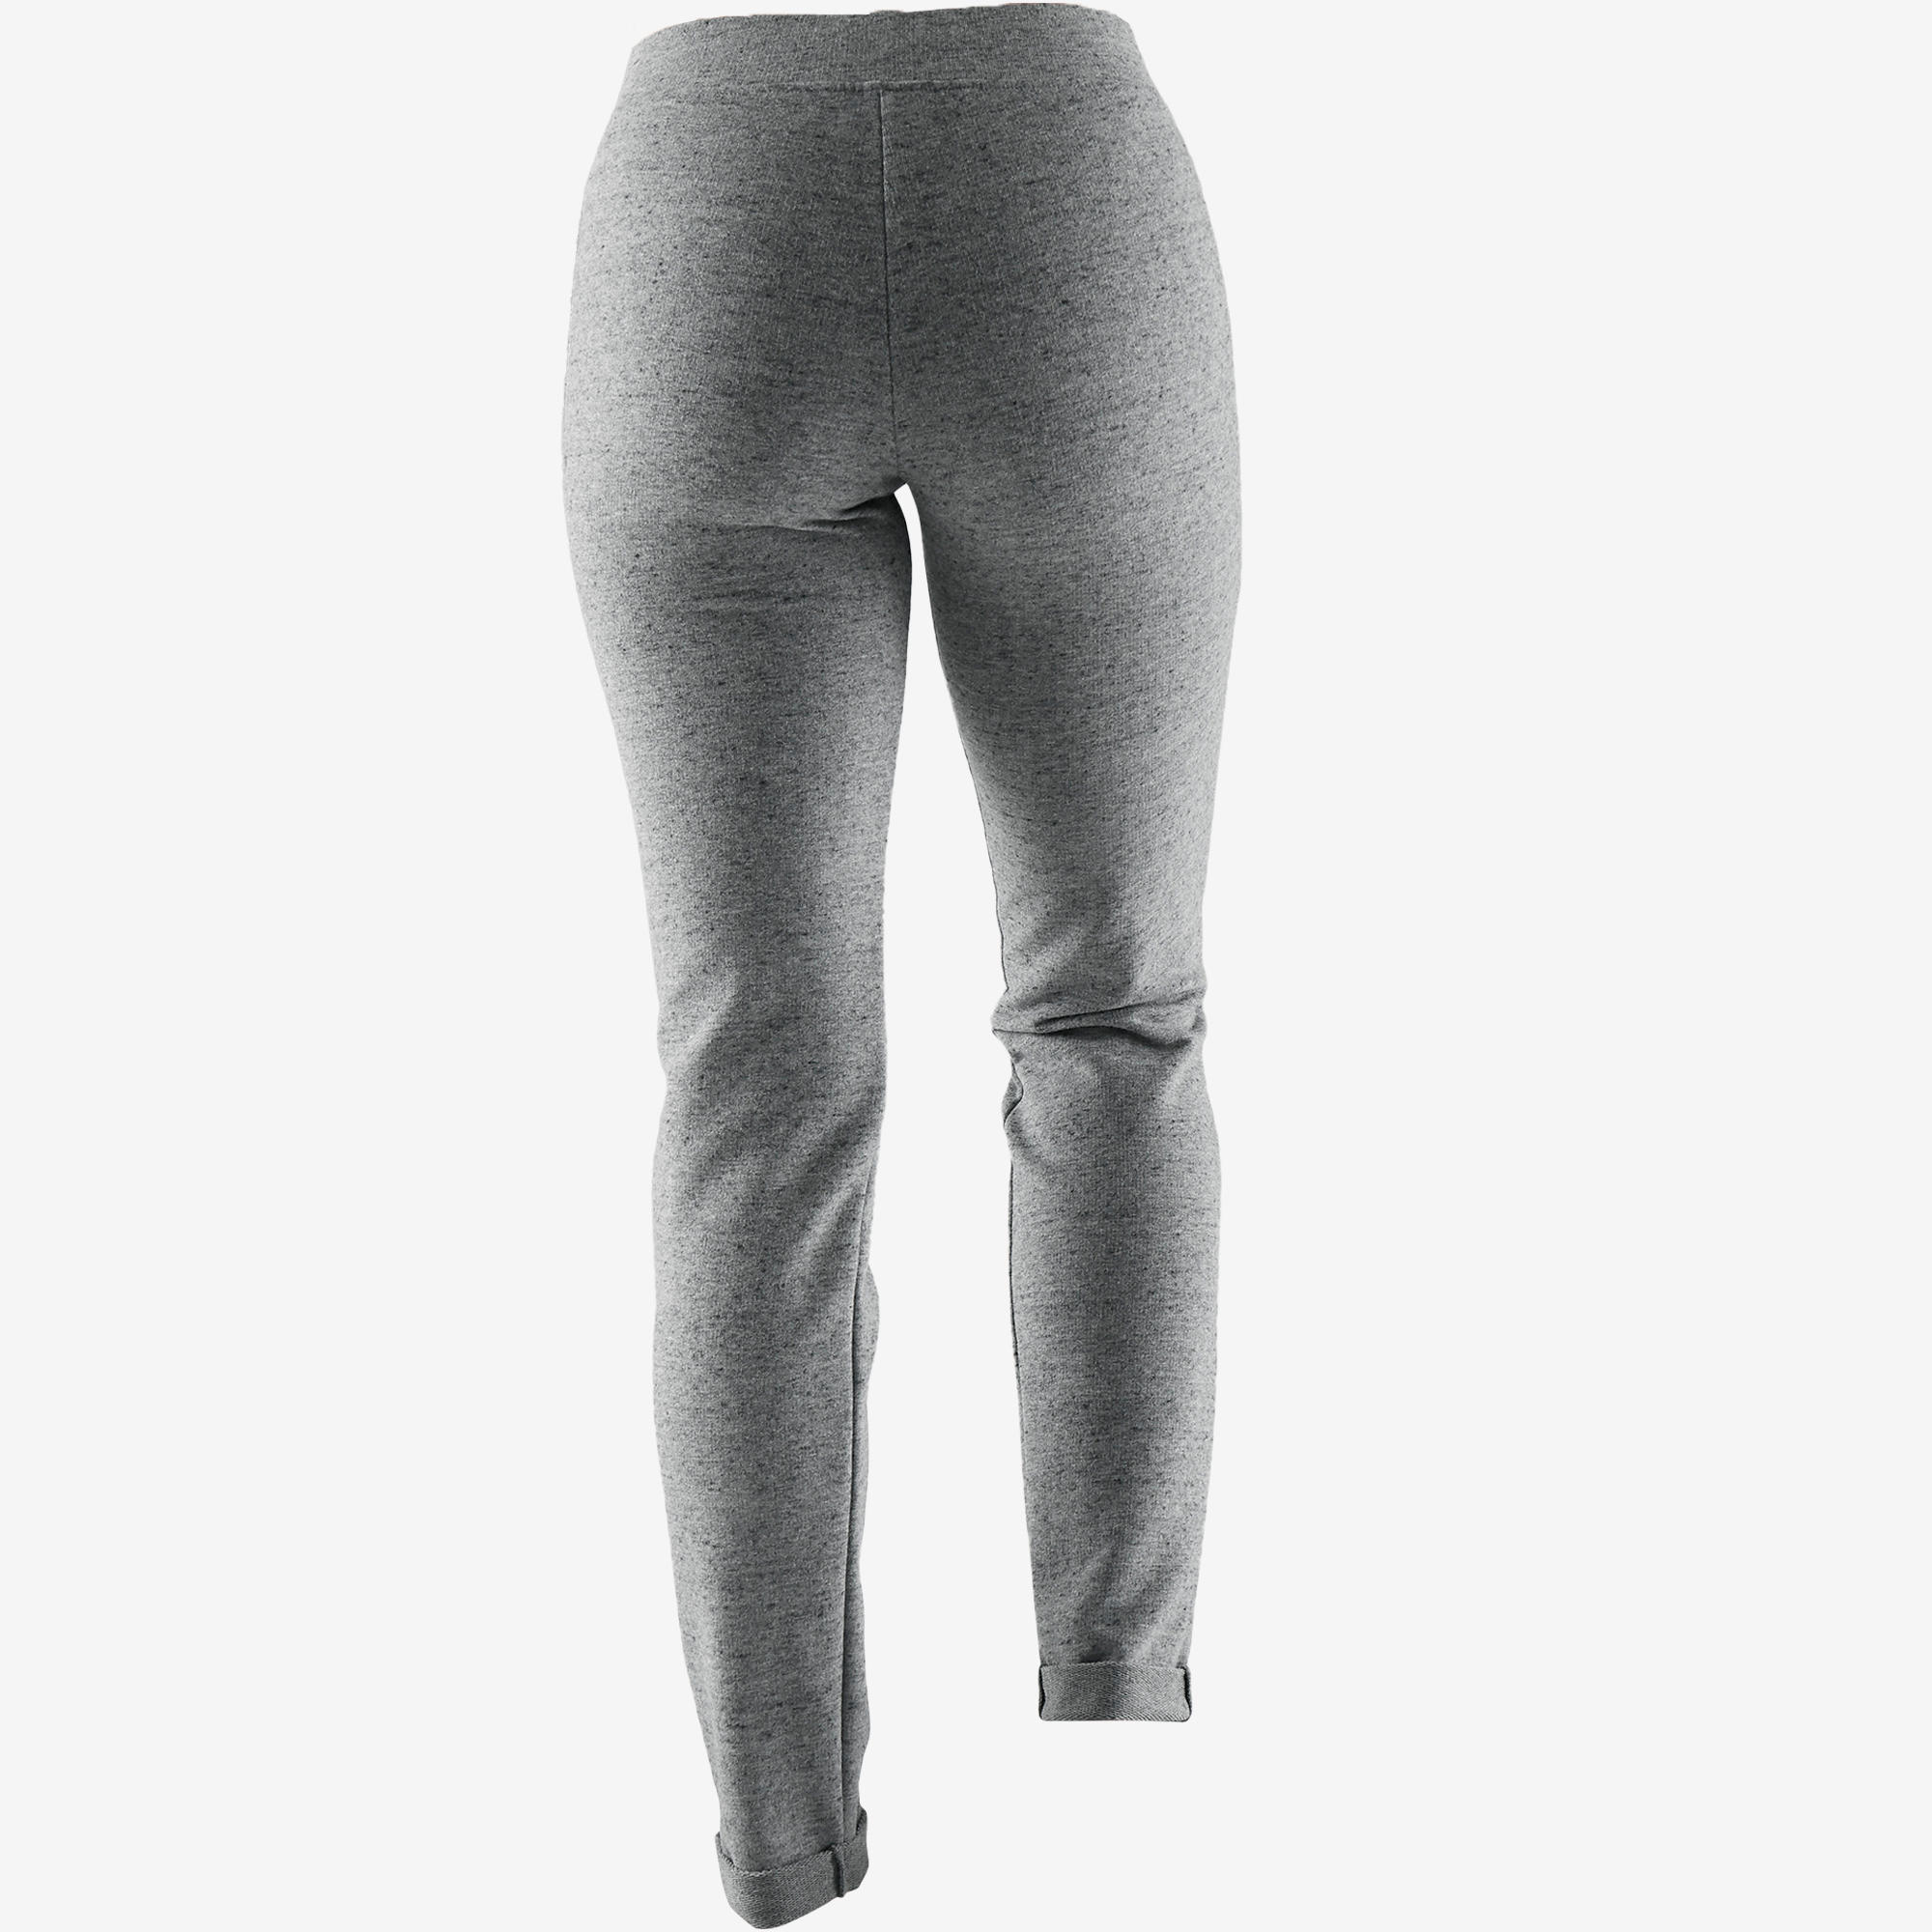 Buy Grey Pants for Women by W Online | Ajio.com